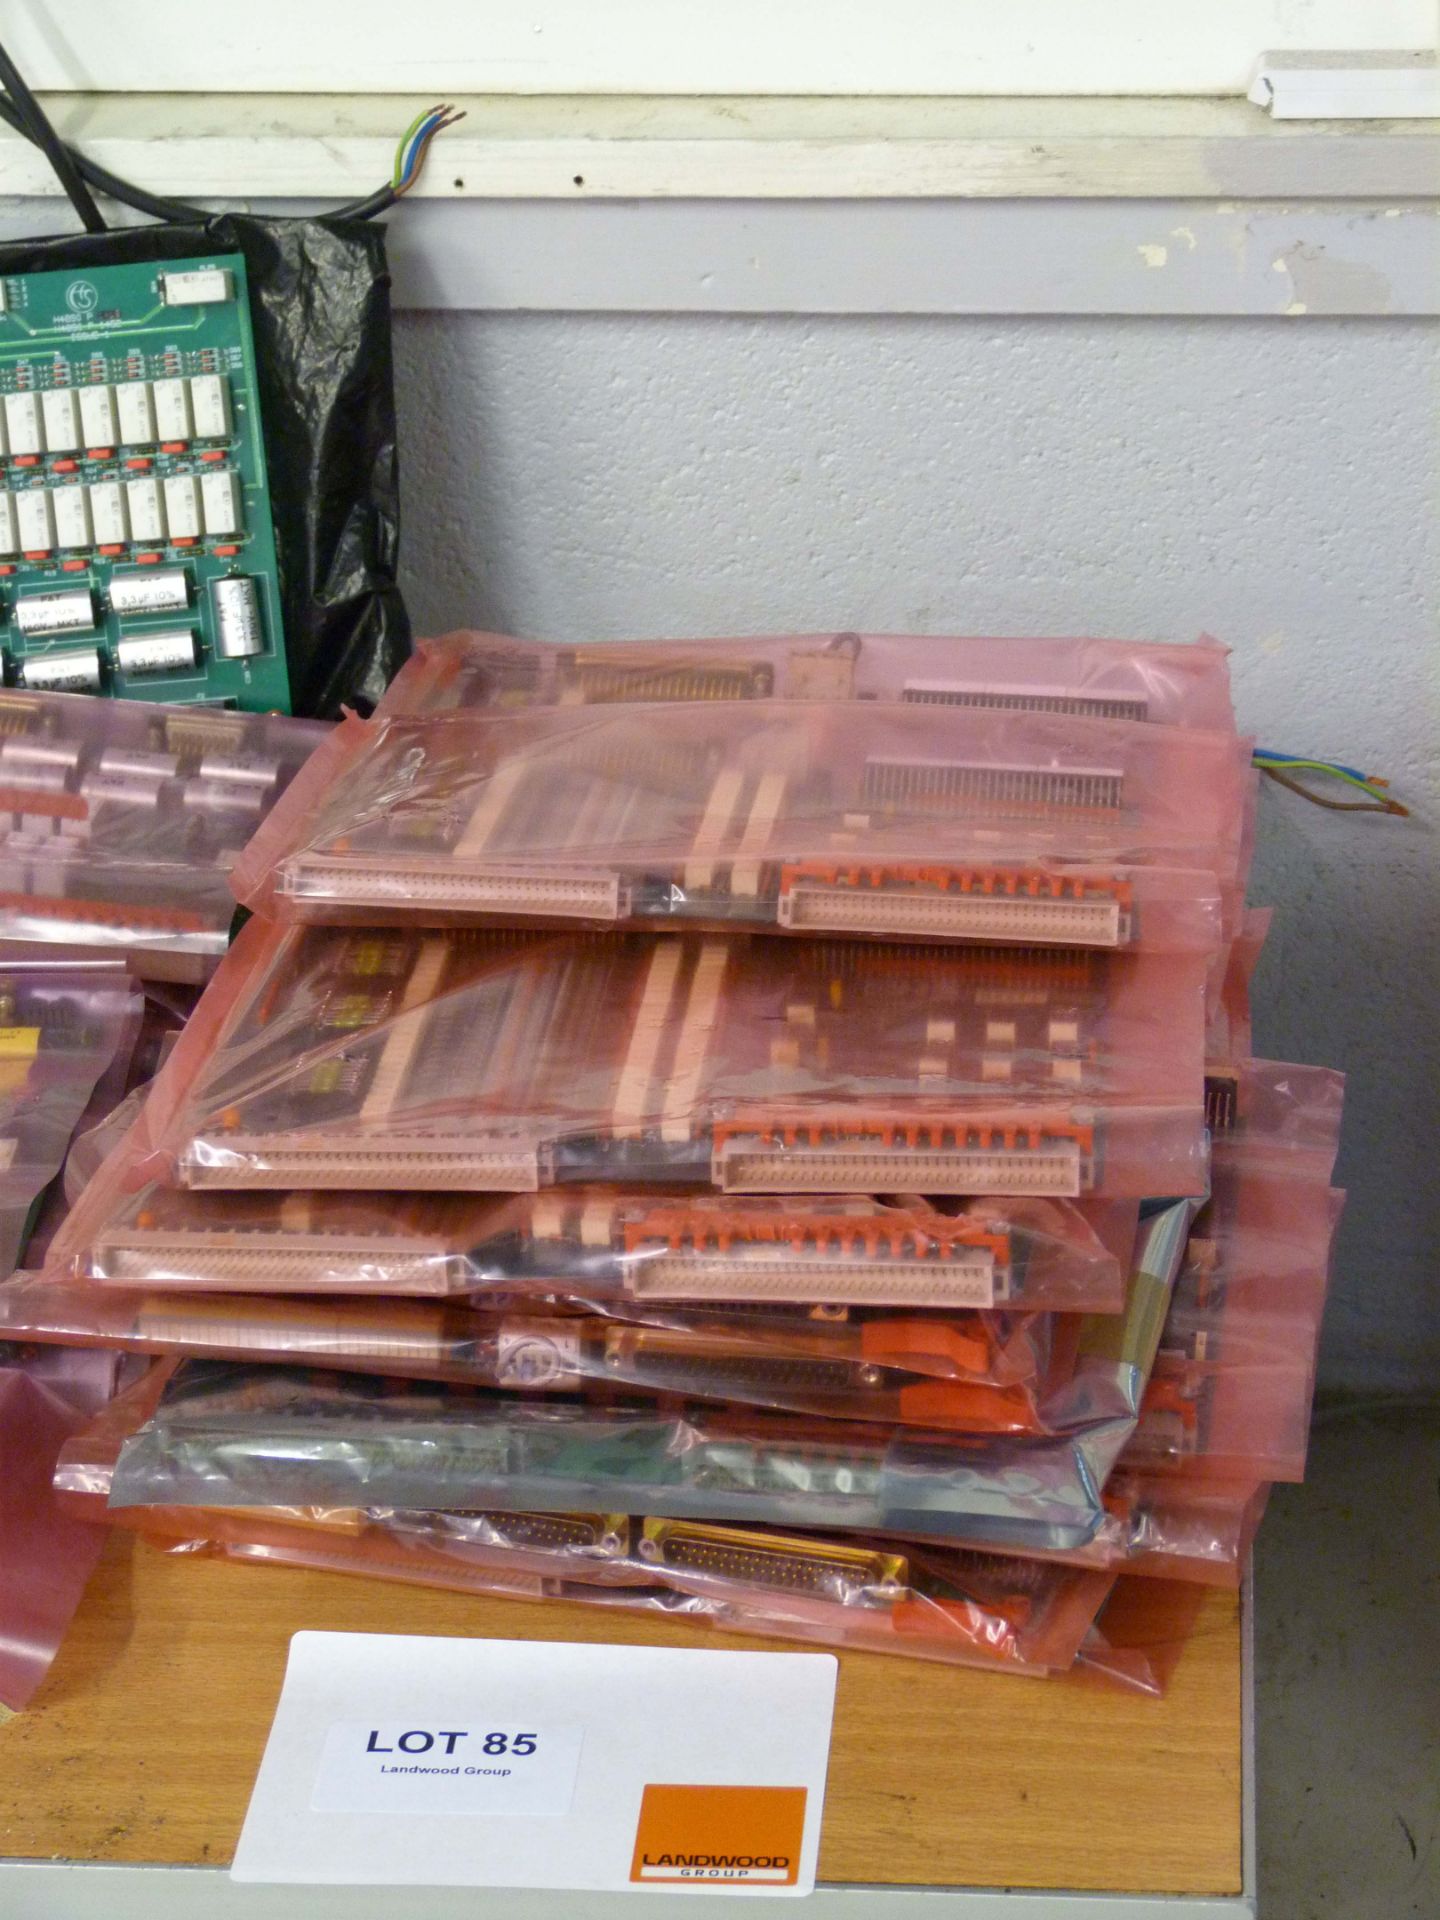 17 Various circuit boards